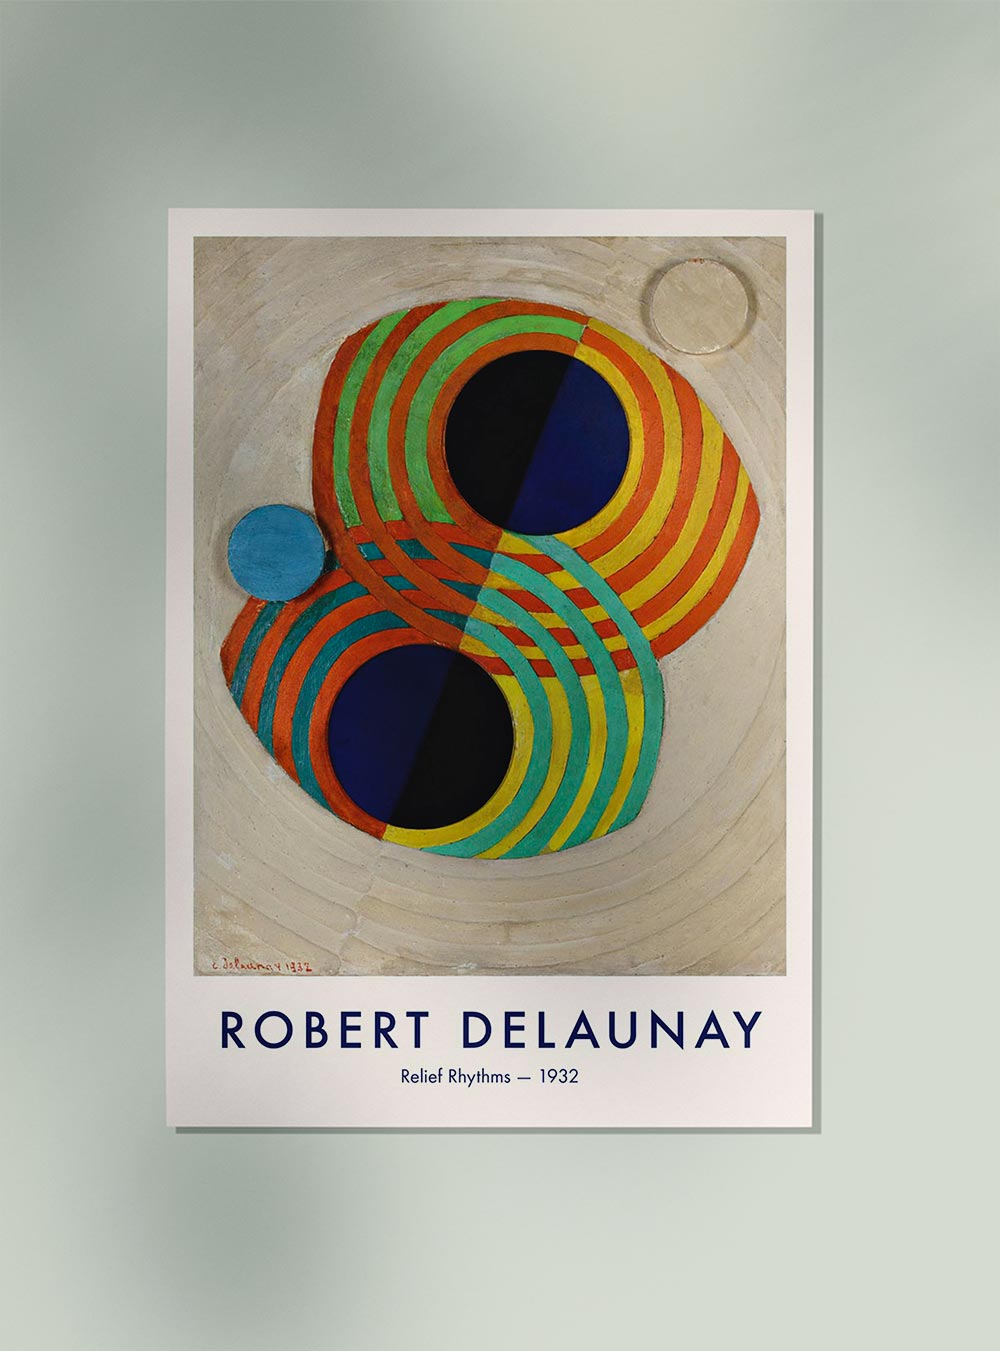 Relief Rhythms Art Print by Robert Delaunay